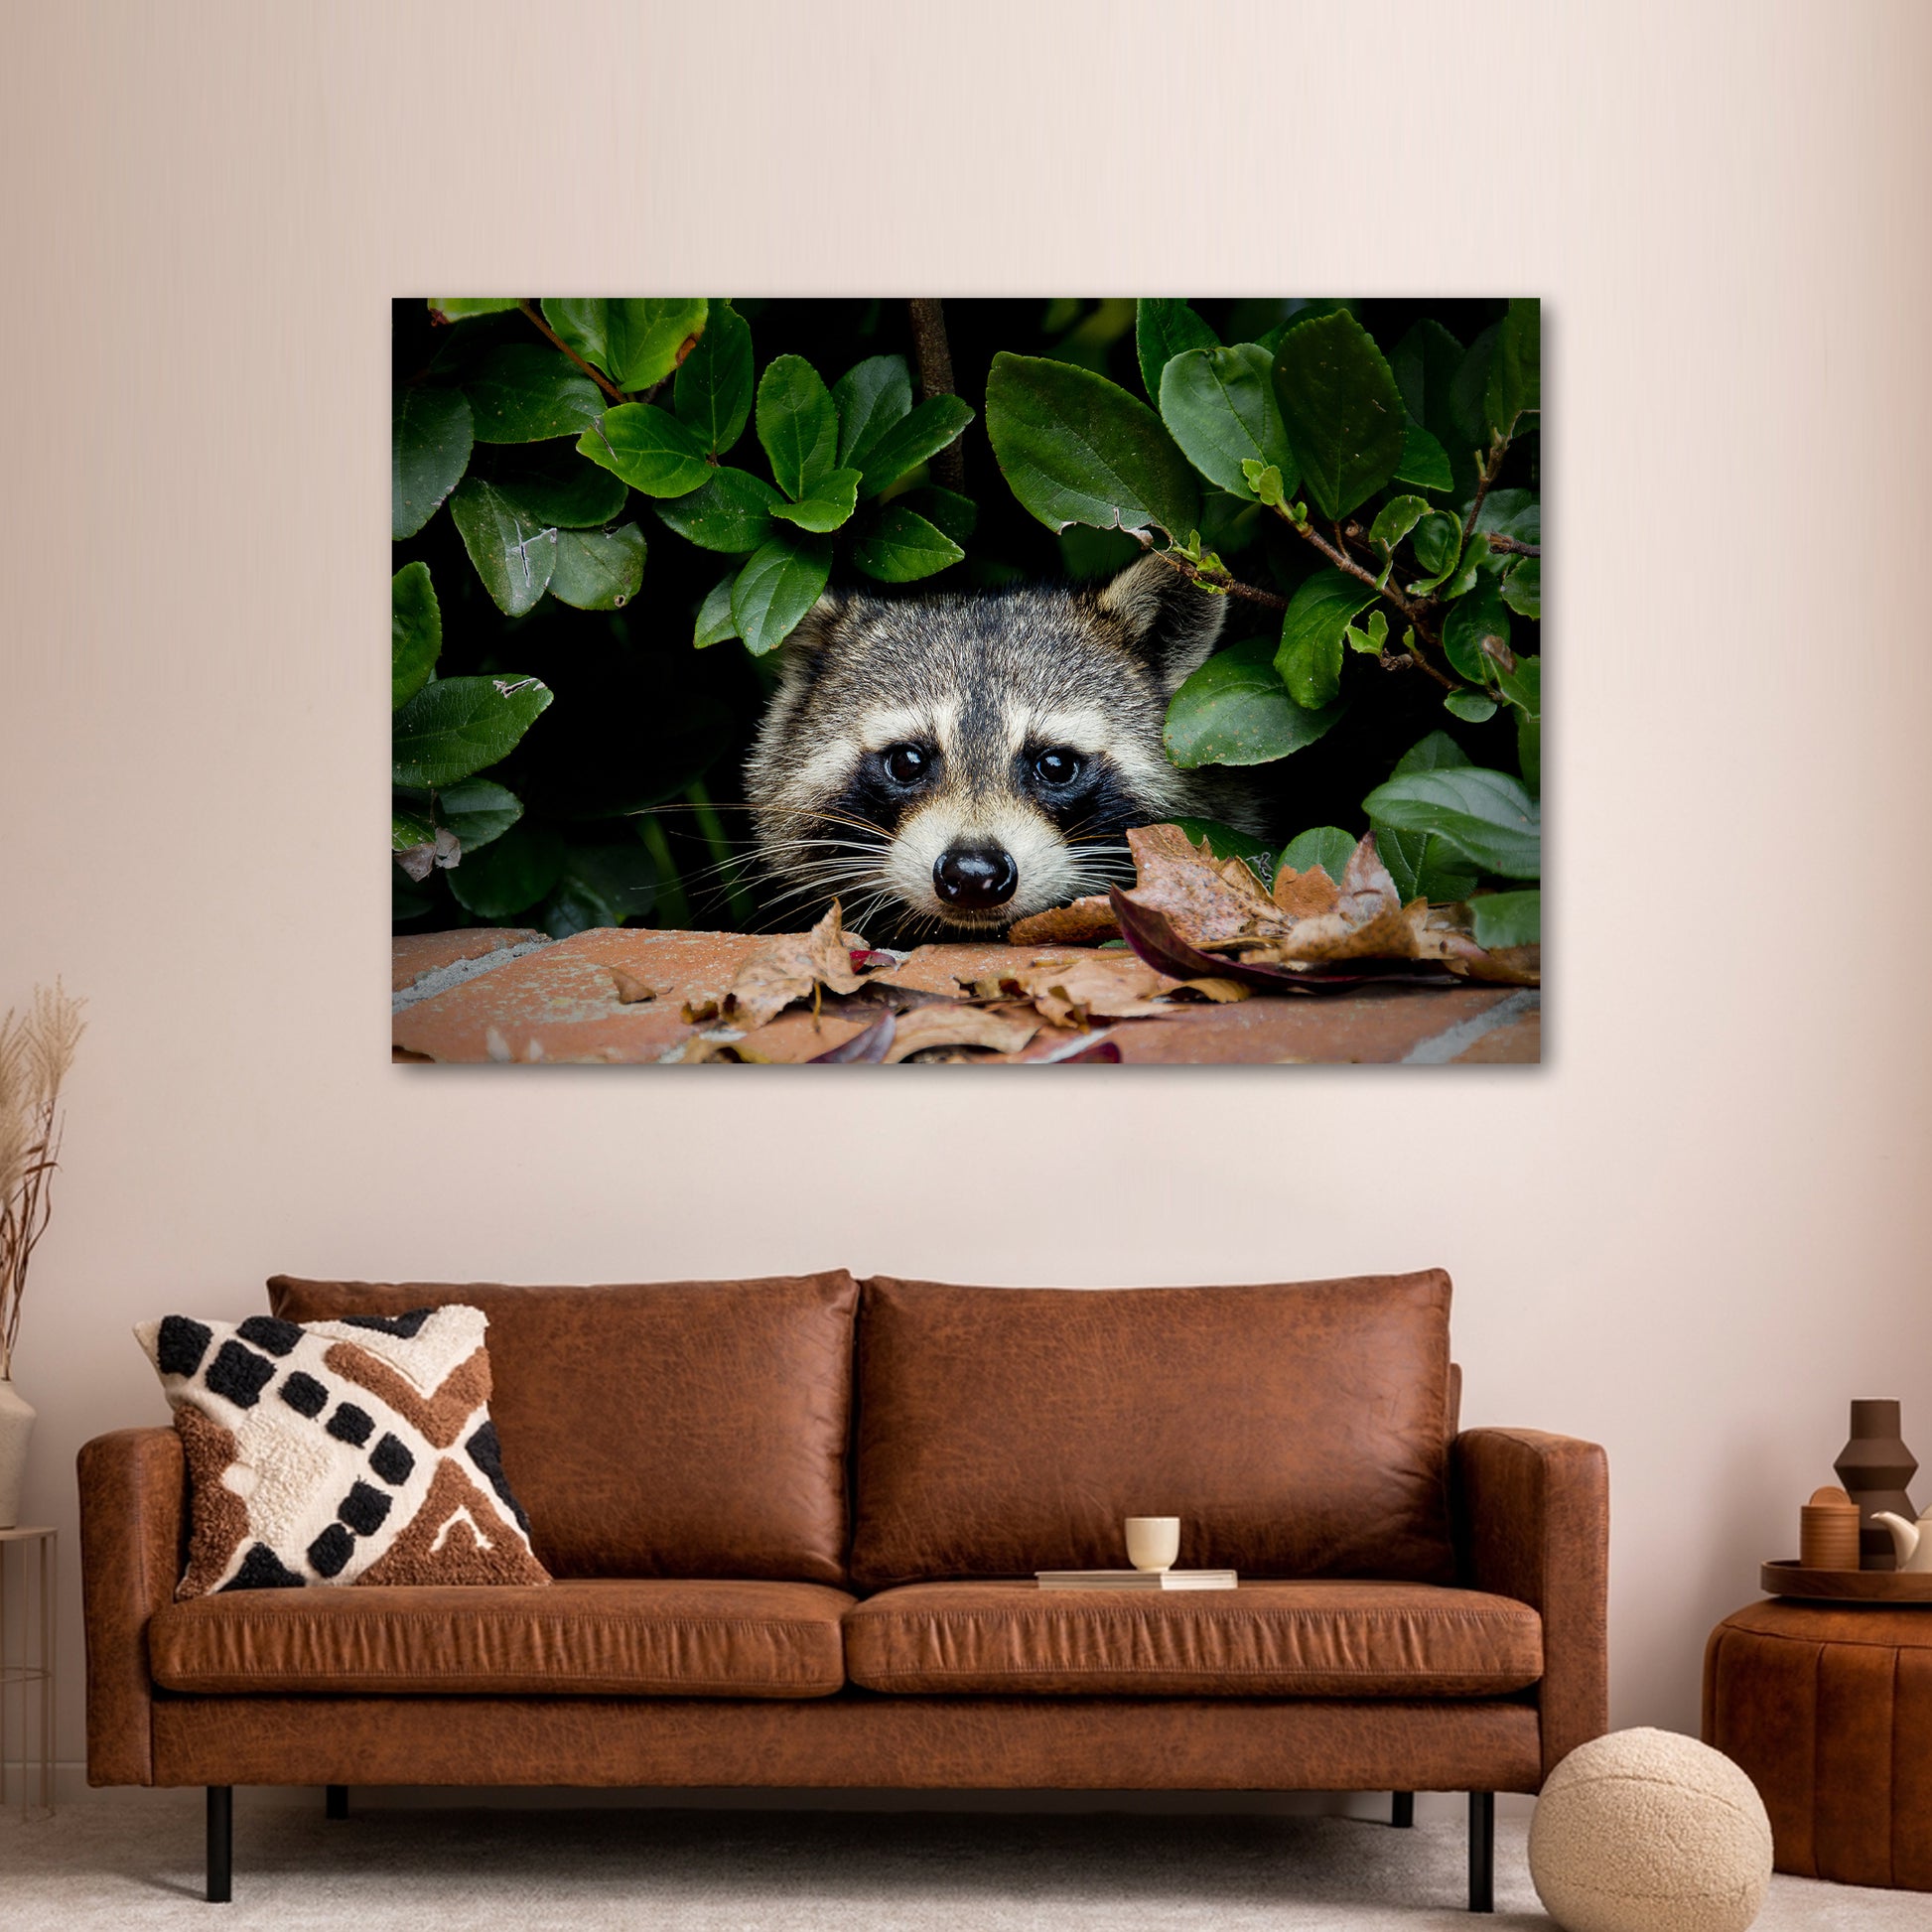 Peek-a-Boo Raccoon Canvas Wall Art in the Woods